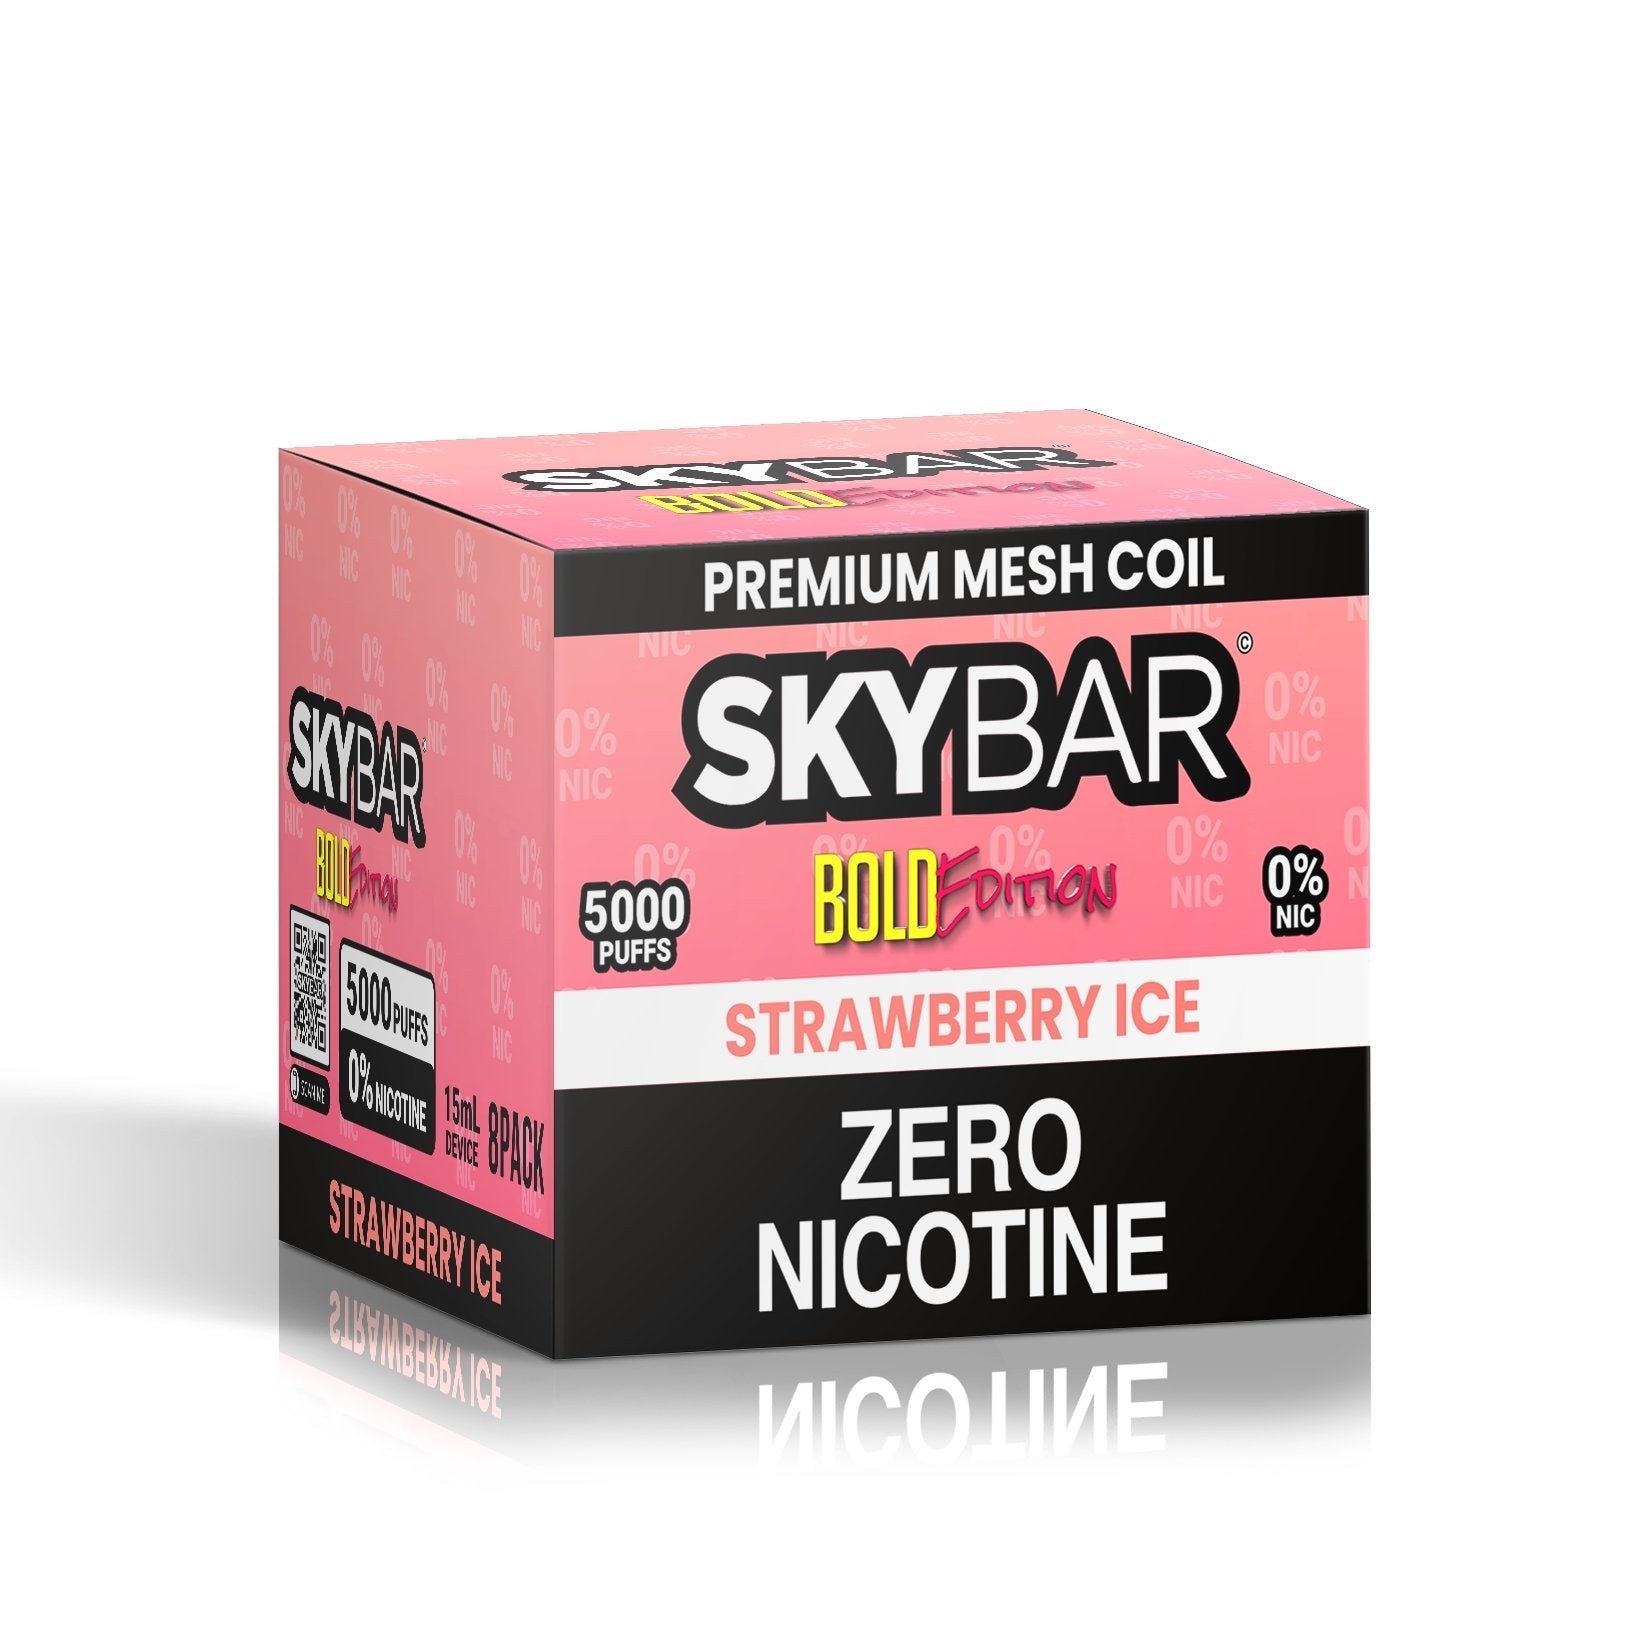 SKYBAR BOLD 5000 PUFFS 0% Nic ( 8ct BOX wholesale) - Skybar